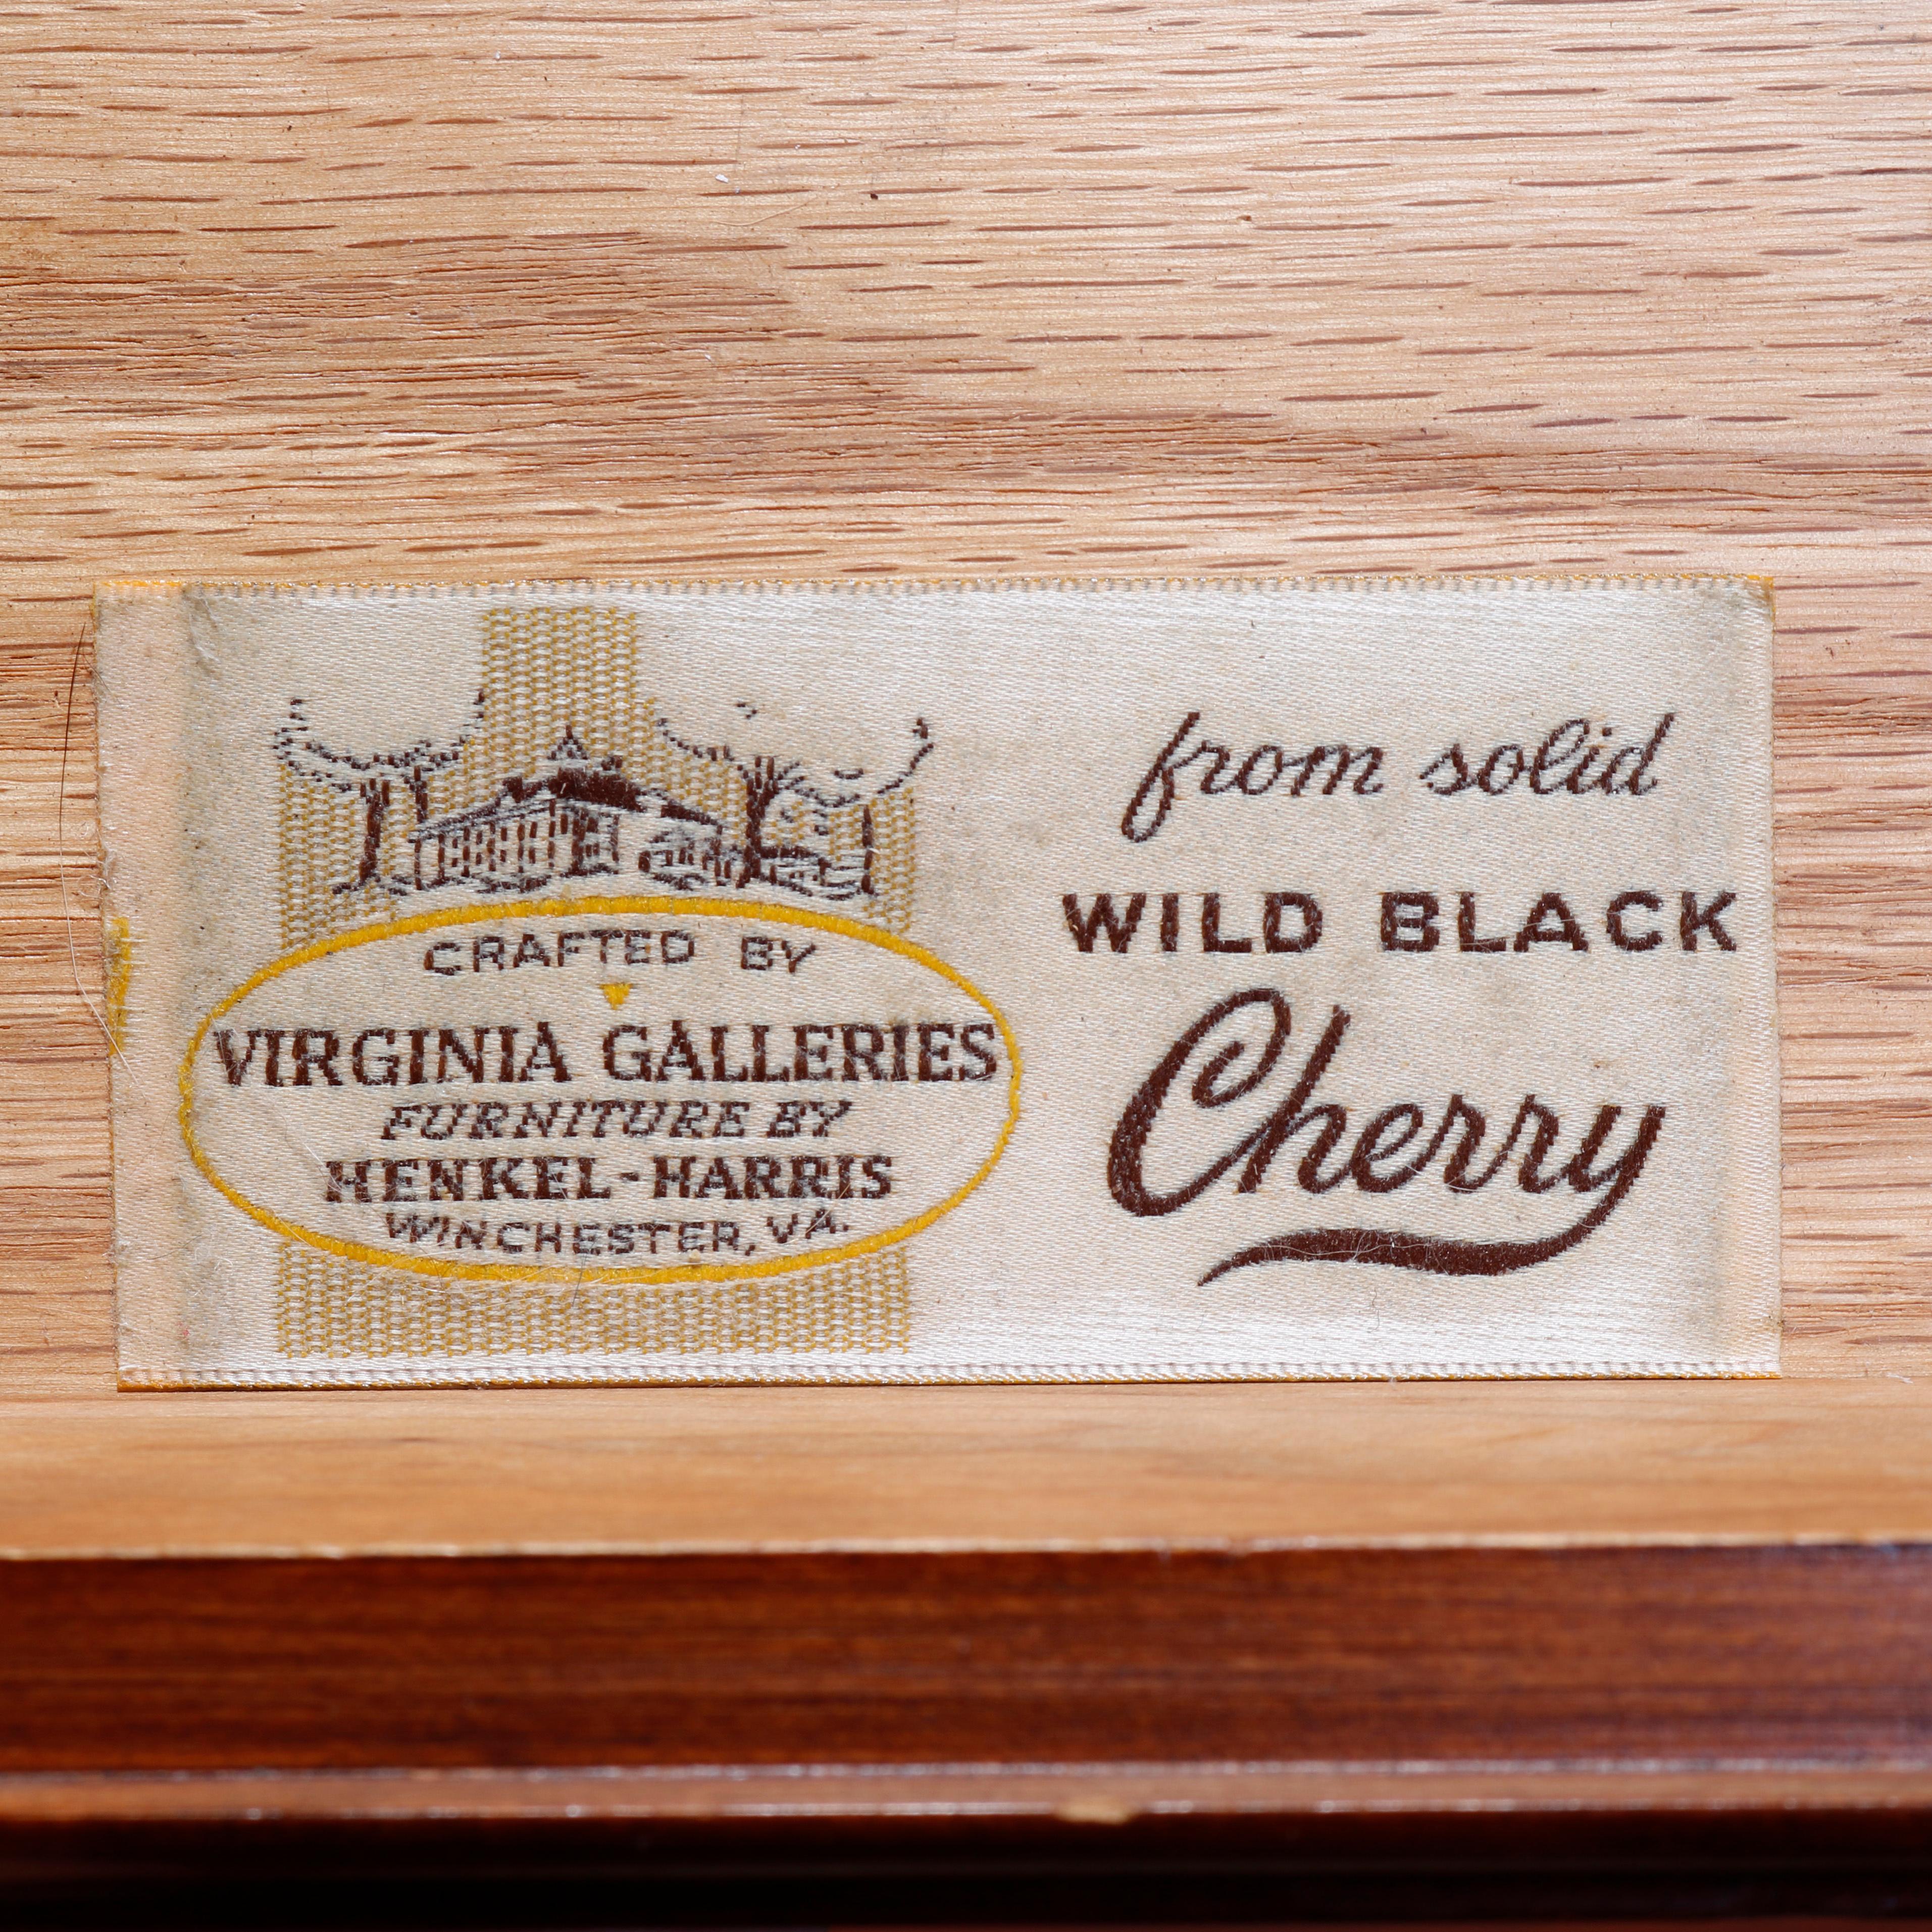 Henkel Harris Chippendale Virginia Galleries Black Cherry Silver Chest 6